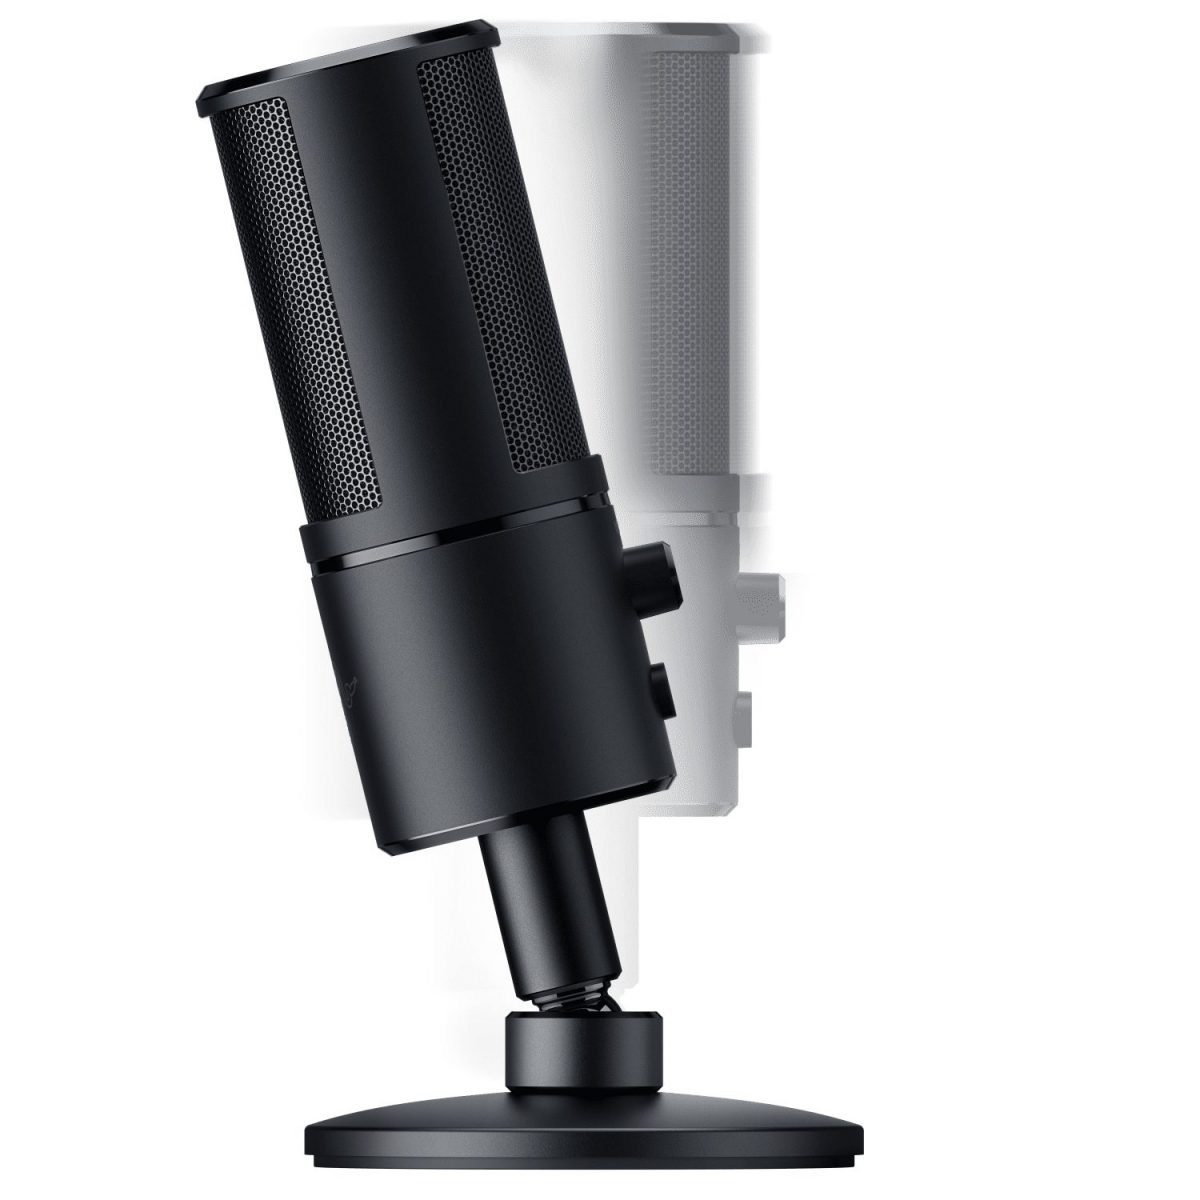 Razer SEIREN X Professional USB Microphone - Razer 1.28.80.26.085